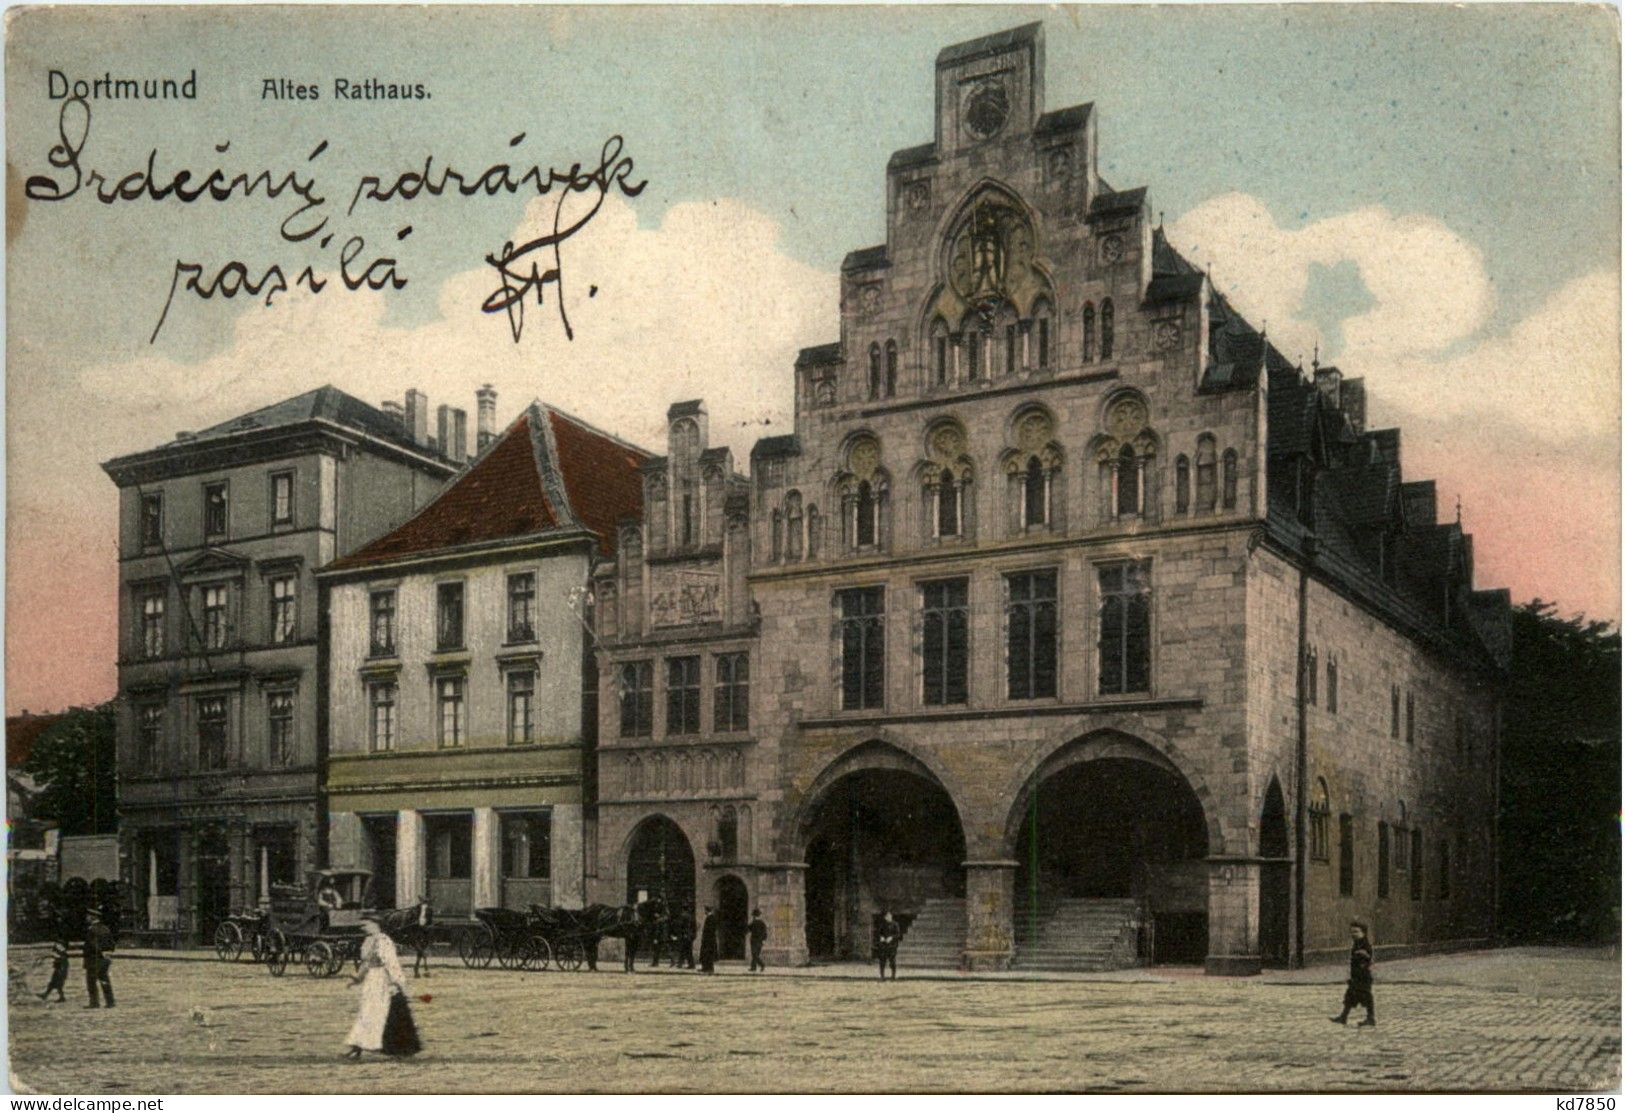 Dortmund - Altes Rathaus - Dortmund